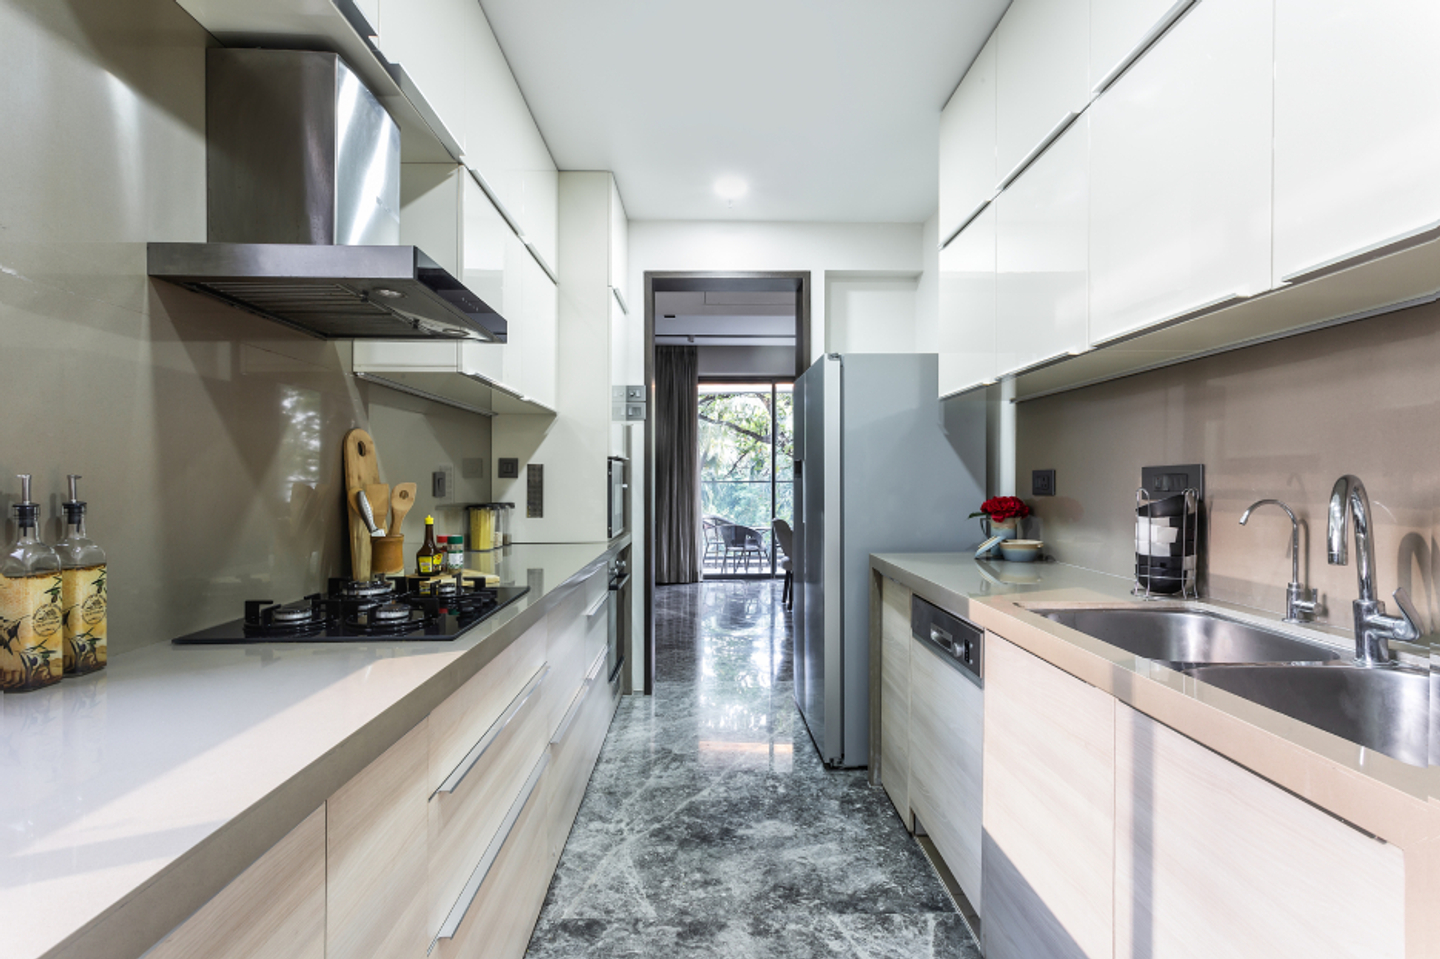 Contemporary Parallel Kitchen Design With Beige Backsplash Tiles